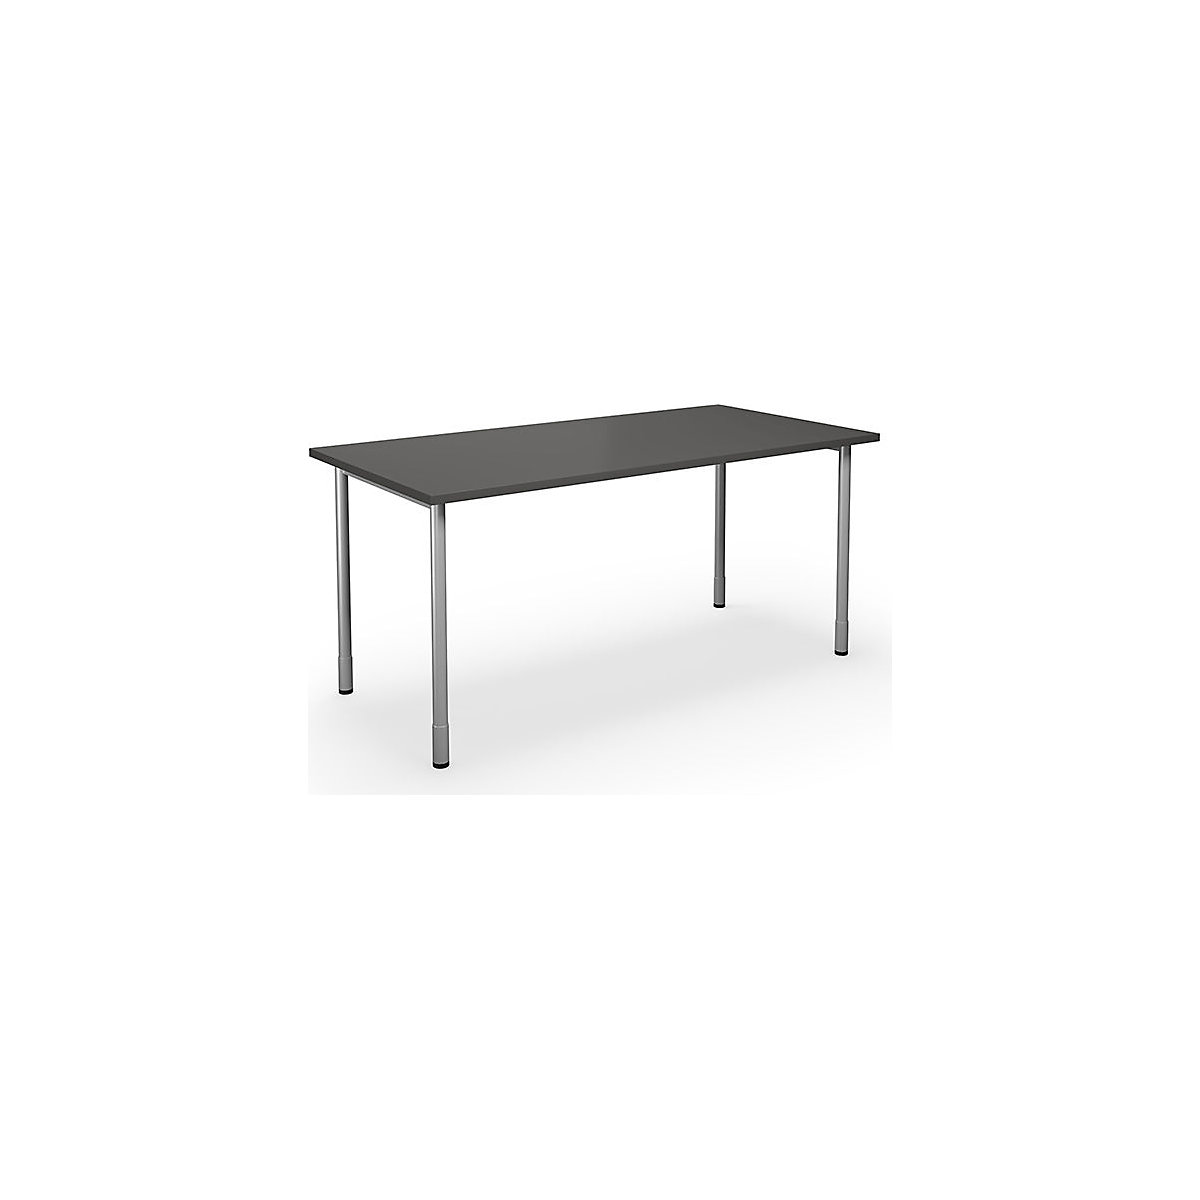 DUO-C multi-purpose desk, straight tabletop, WxD 1600 x 800 mm, dark grey, silver-12